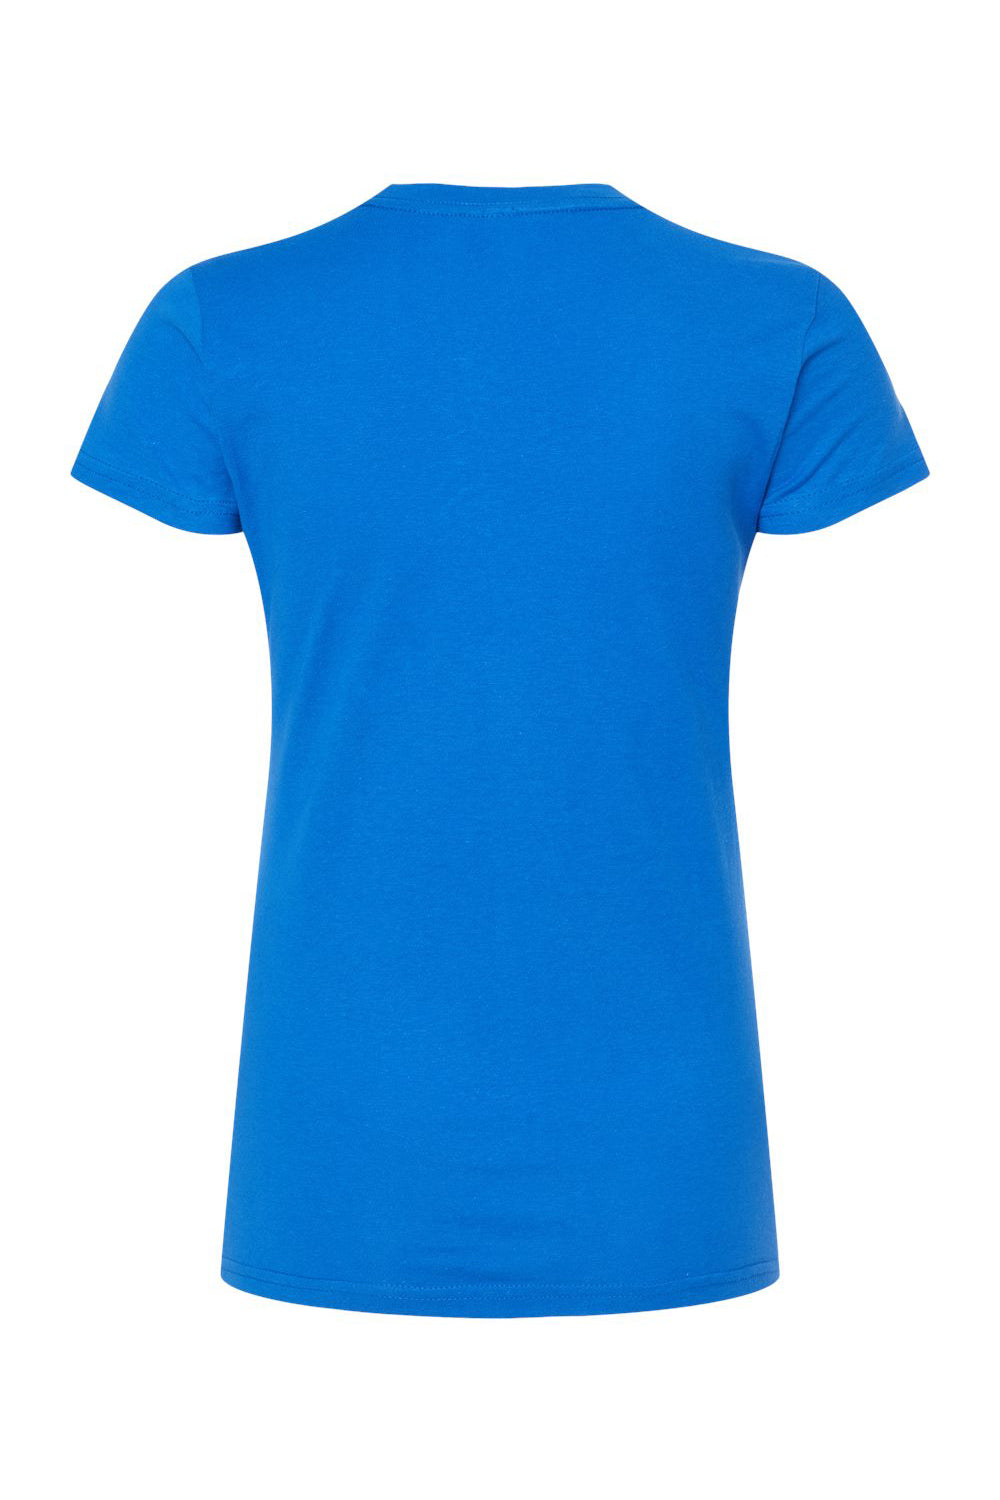 Tultex 213 Womens Fine Jersey Slim Fit Short Sleeve Crewneck T-Shirt Royal Blue Flat Back